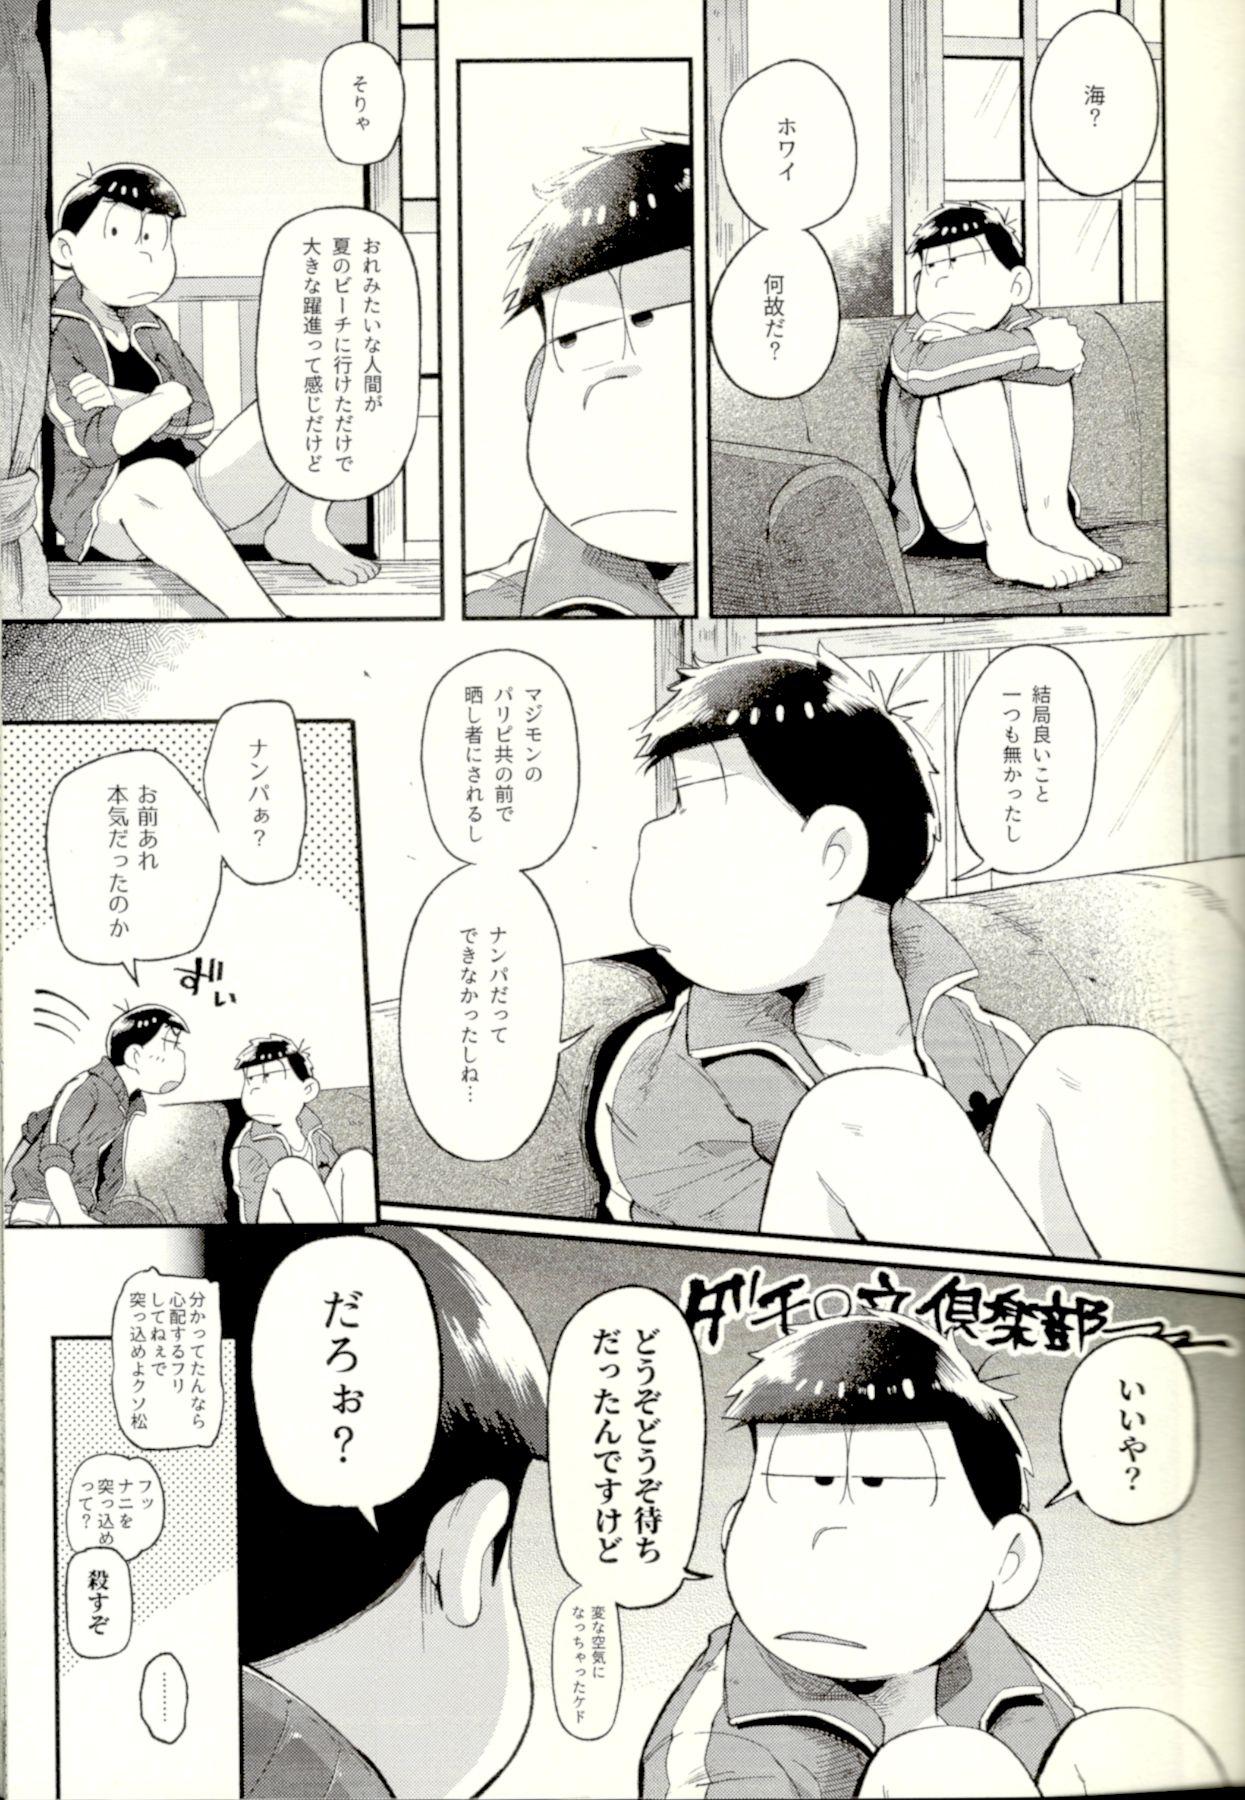 Puba Season in the Summer - Osomatsu-san Loira - Page 7